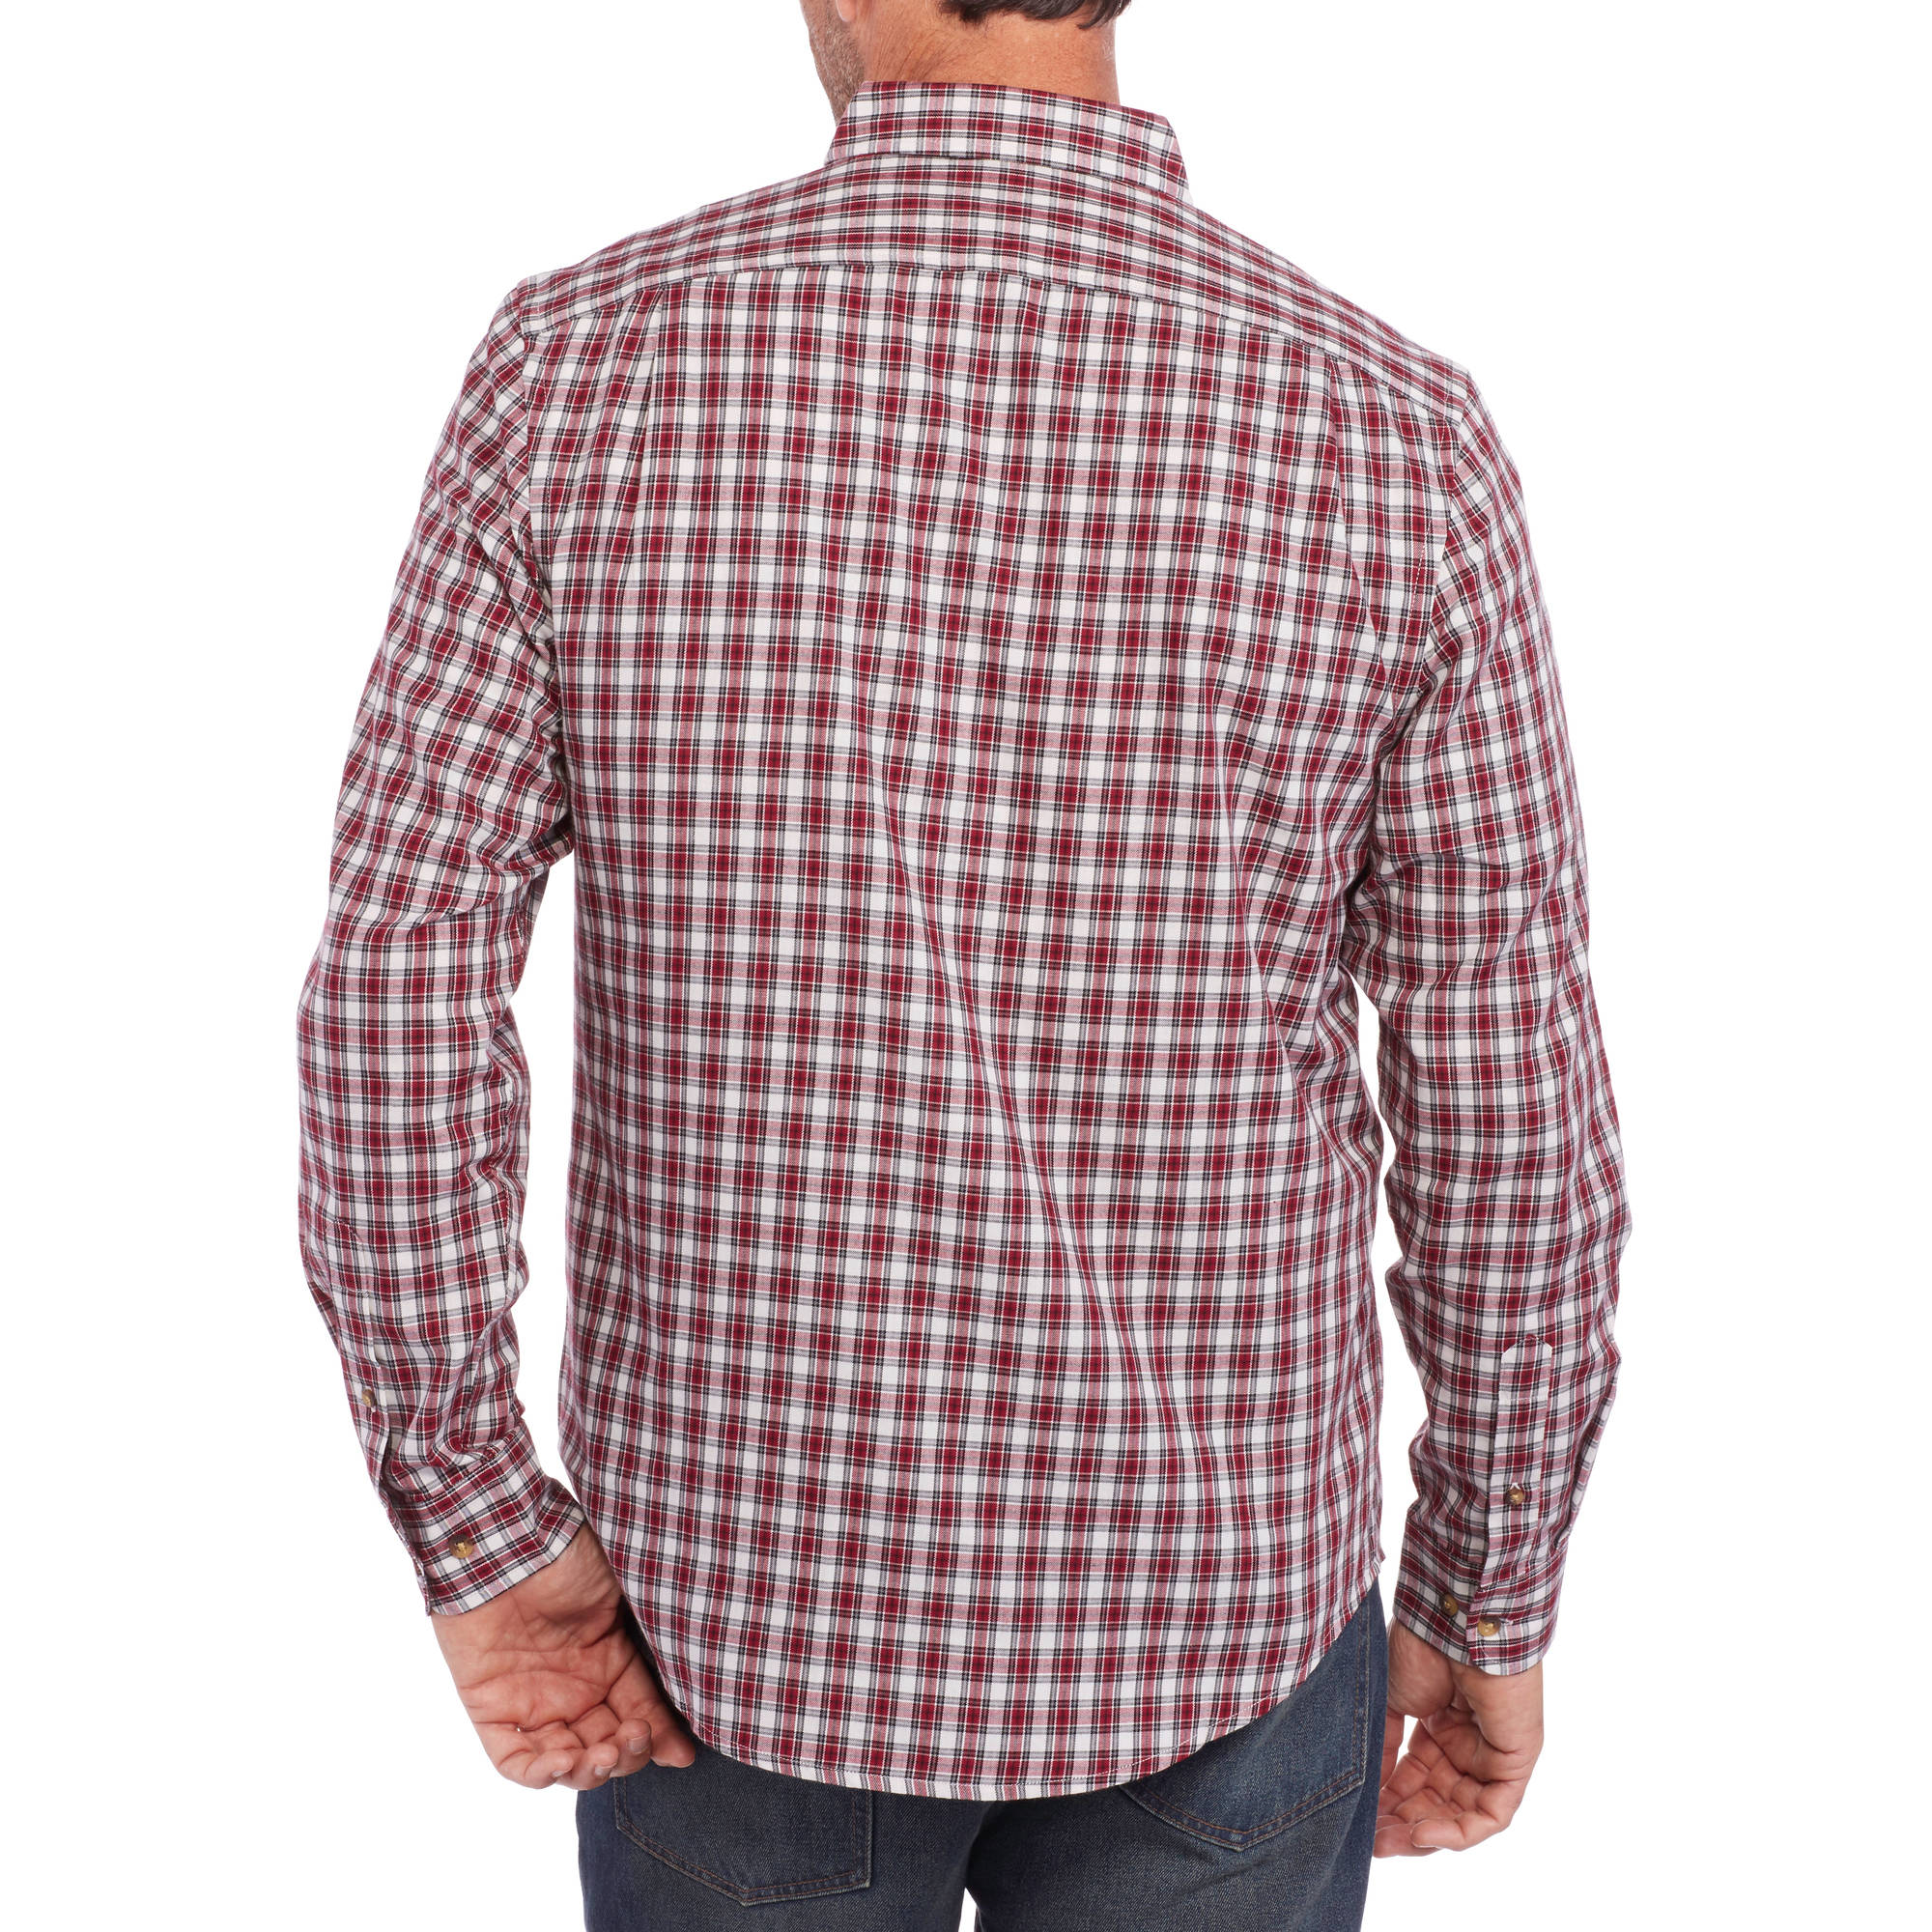 Men's Long Sleeve Twill Plaid Shirt - image 2 of 2